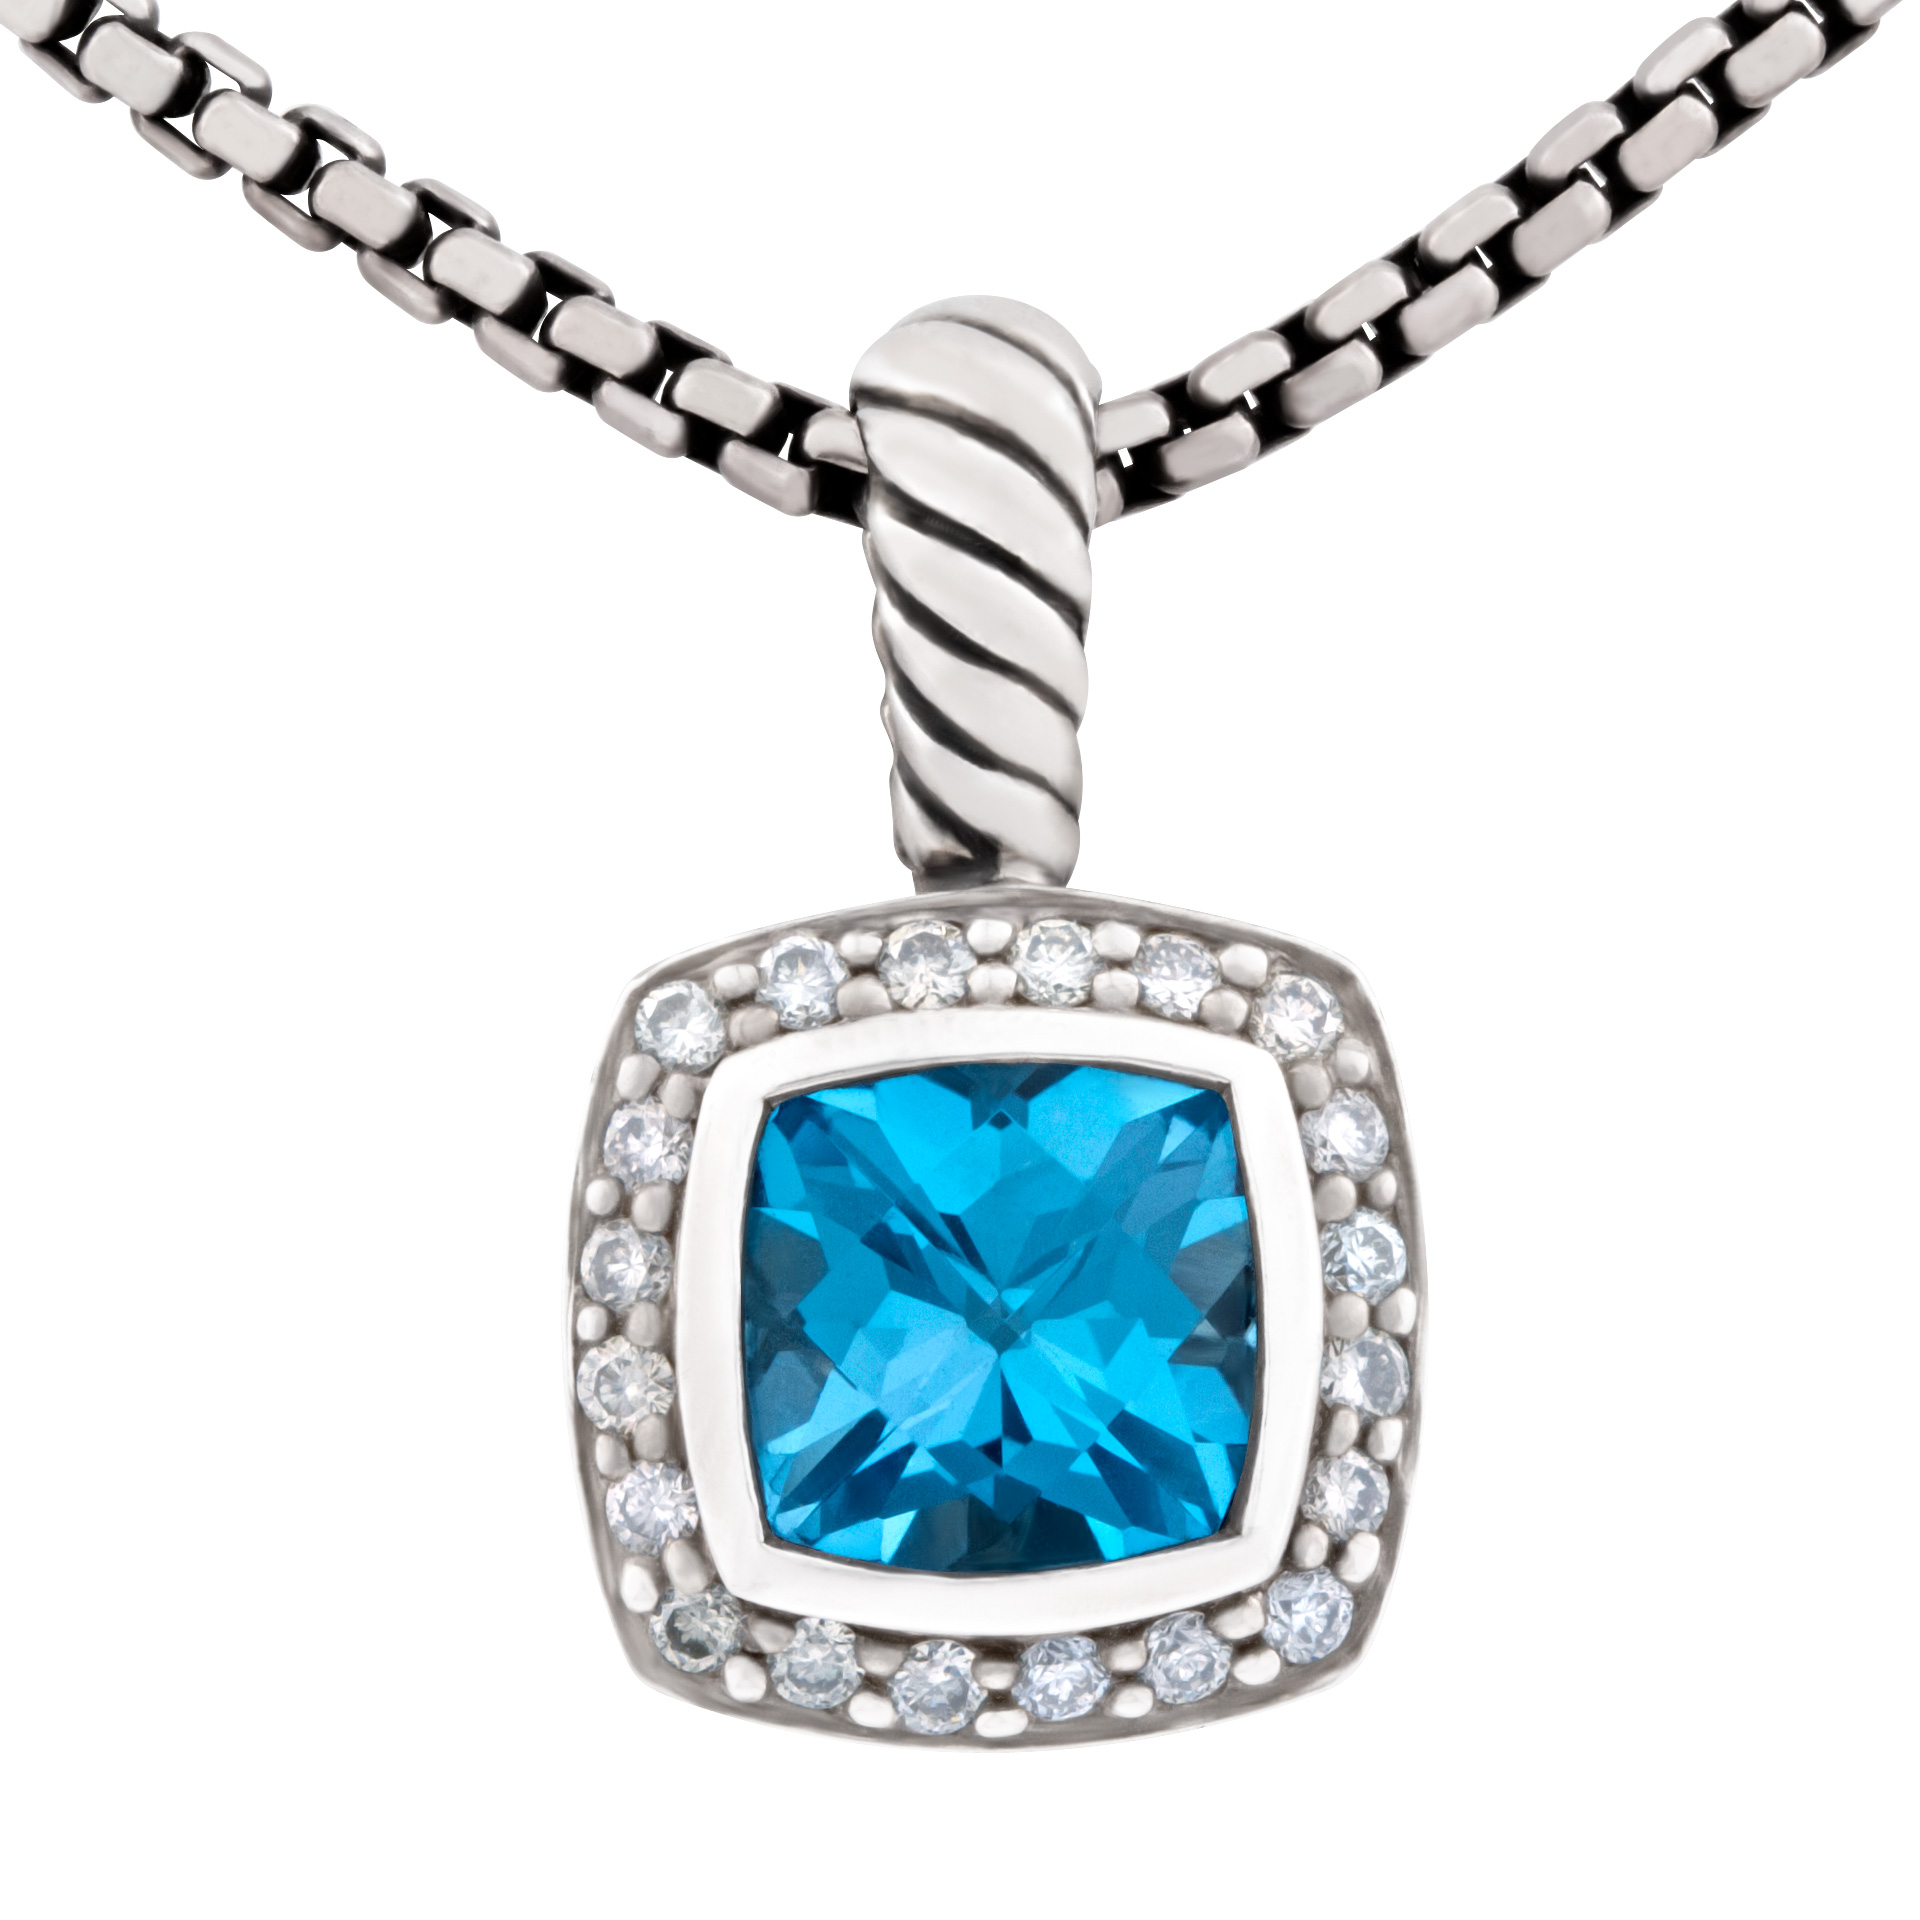 David Yurman Blue topaz and diamond pendant with chain. image 1